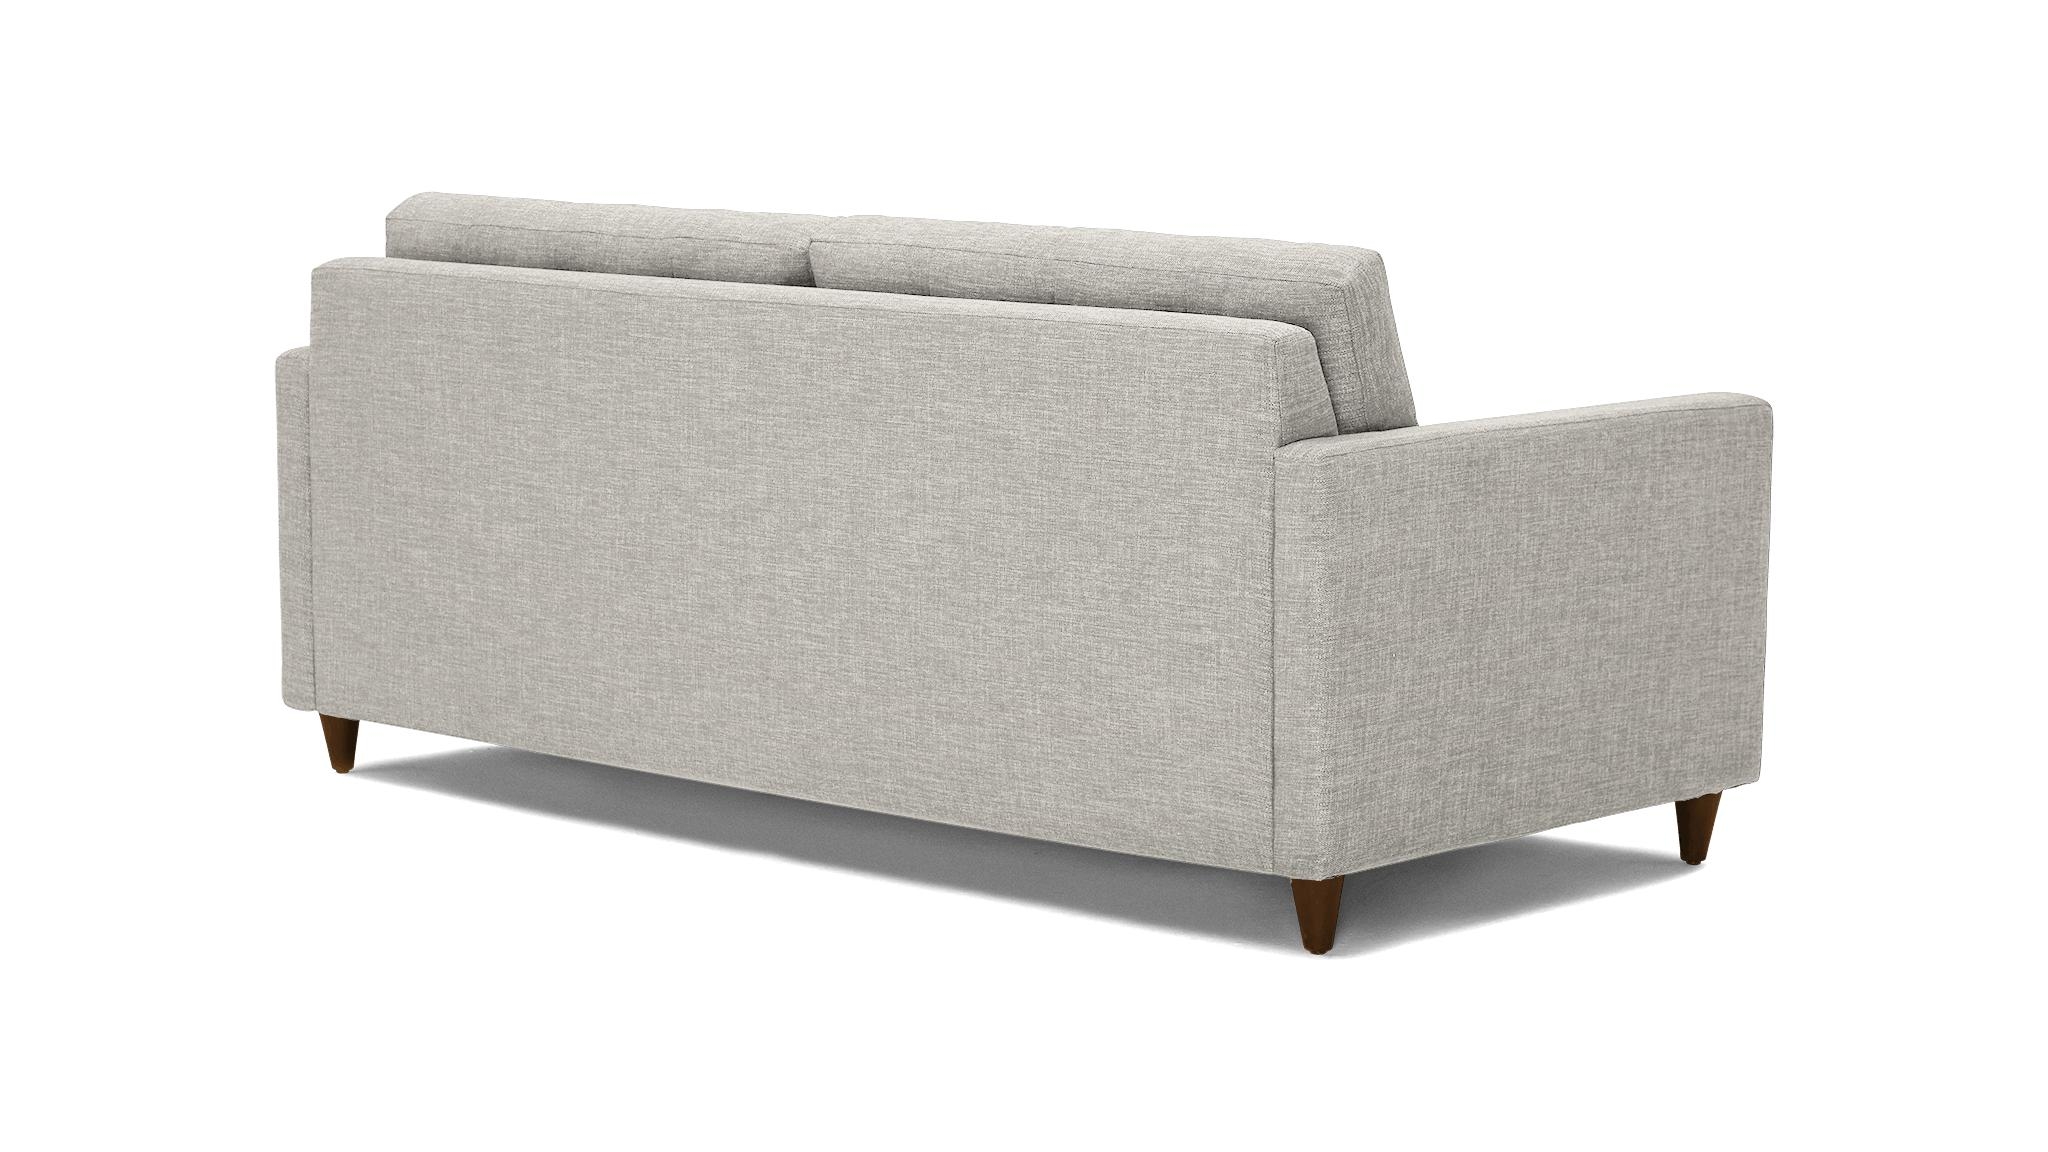 Gray Eliot Mid Century Modern Sleeper Sofa - Bloke Cotton - Mocha - Foam - Image 3